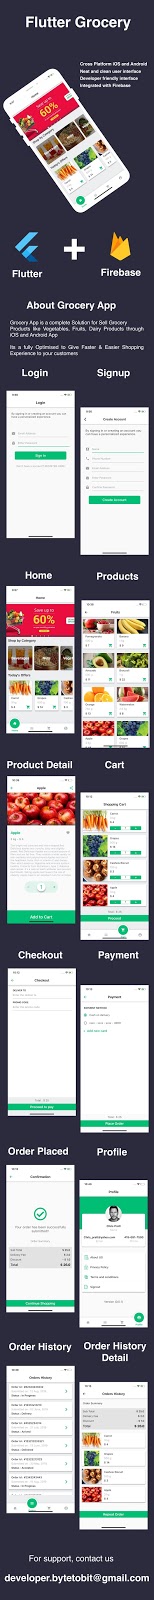 Flutter Grocery App UI + Backend - 1